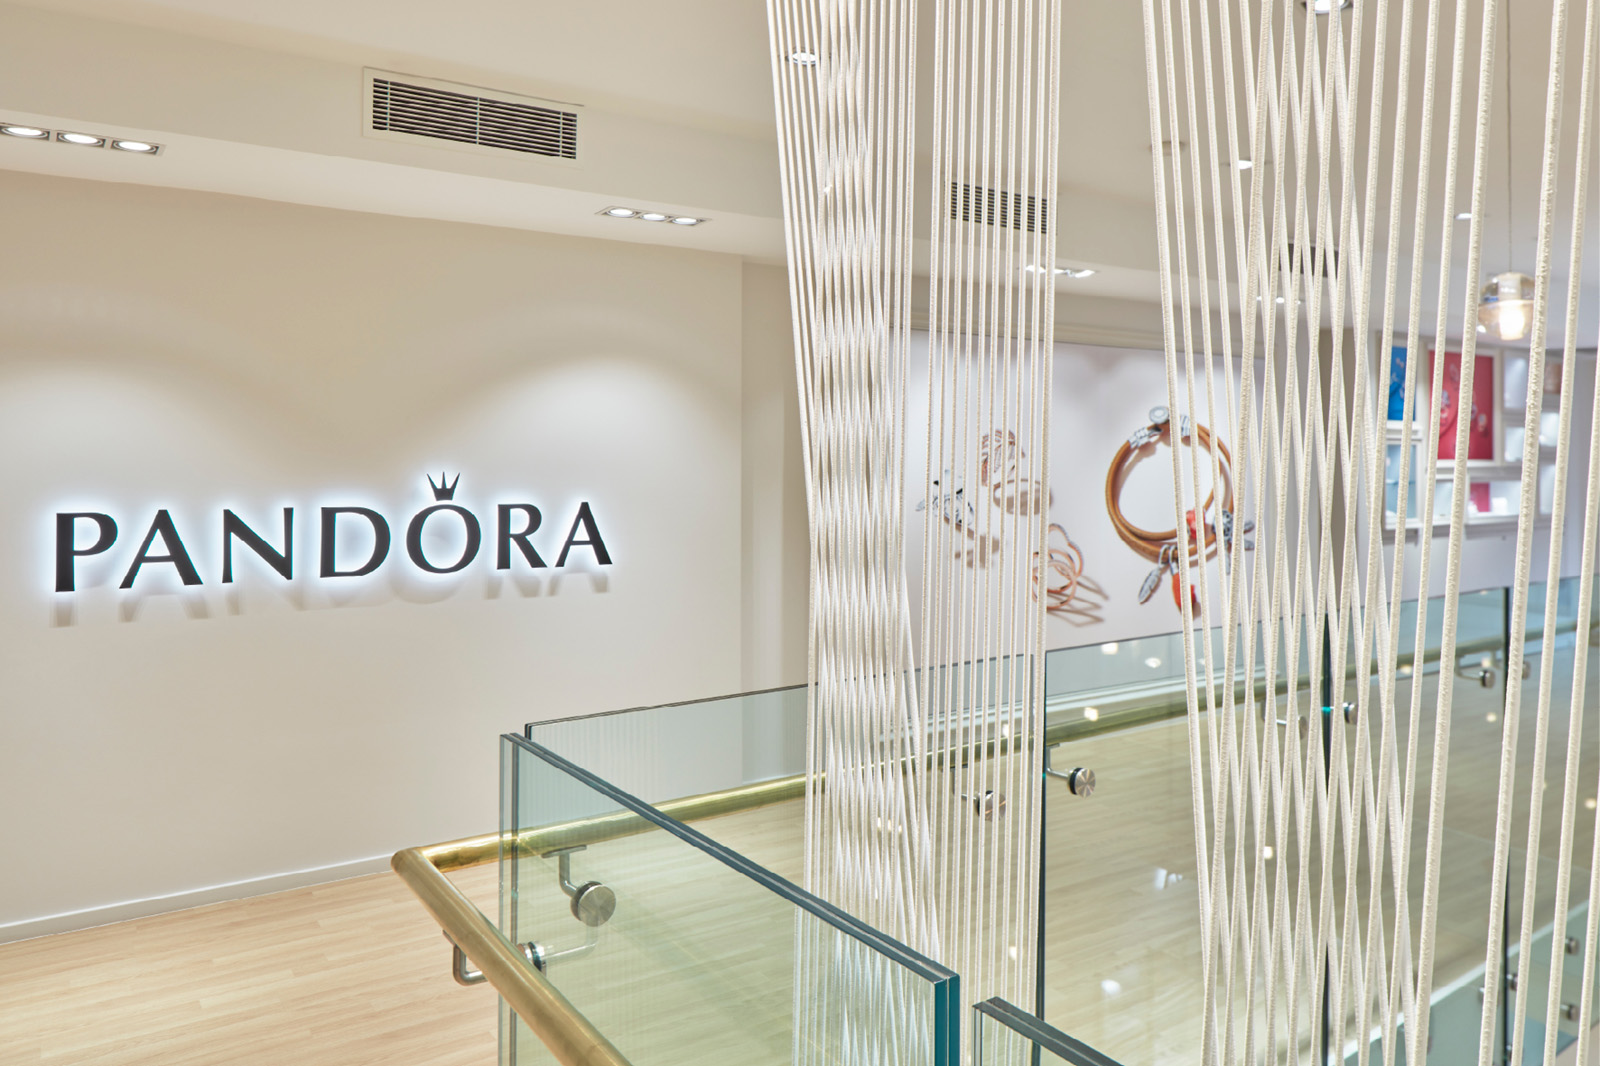 Pandora Boutique - Melbourne